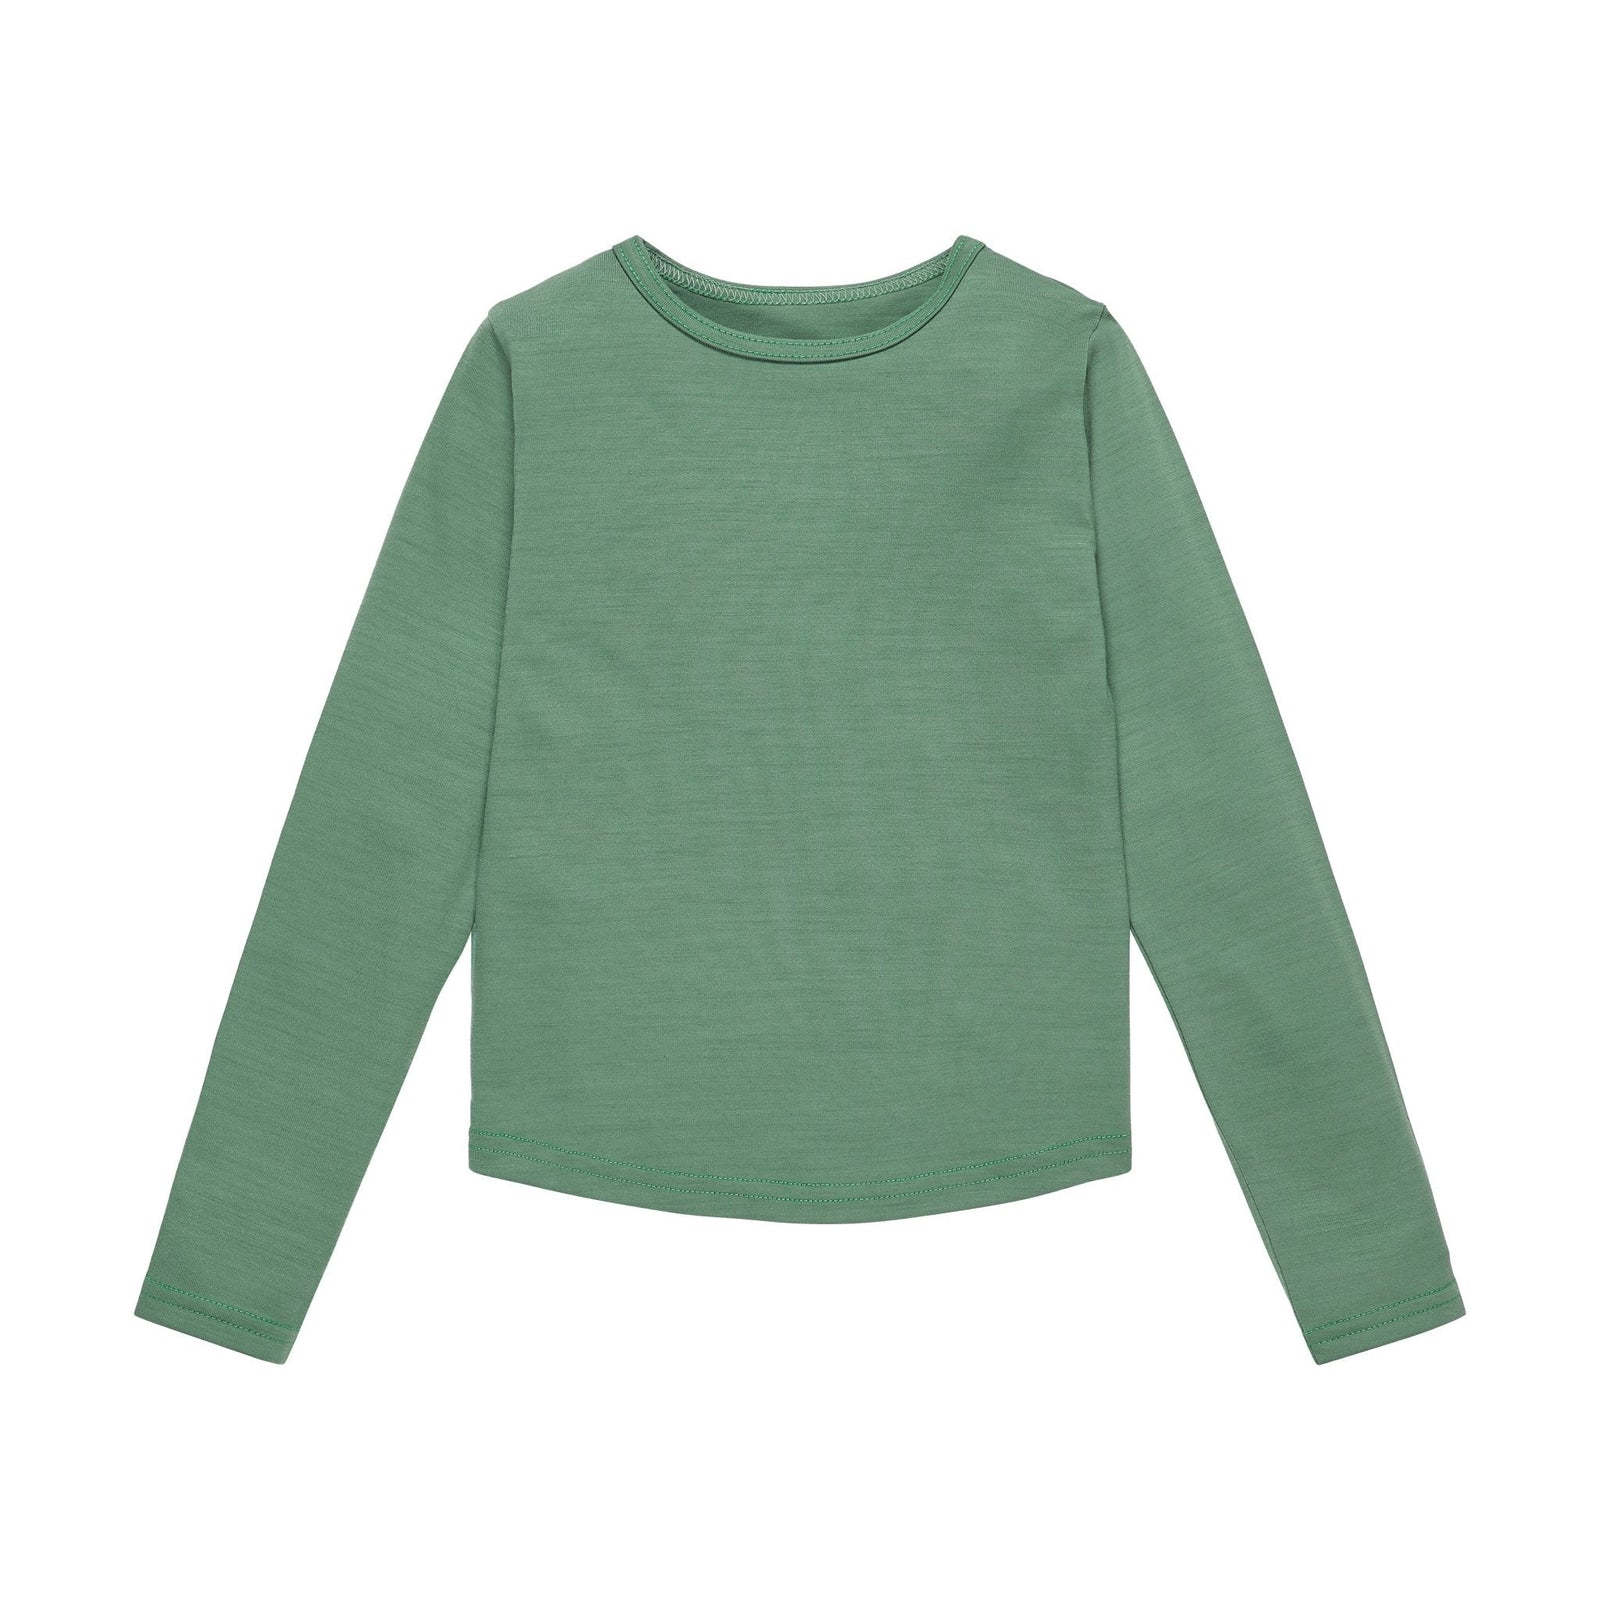 Smalls Merino Long Sleeve Top  | Emerald Green